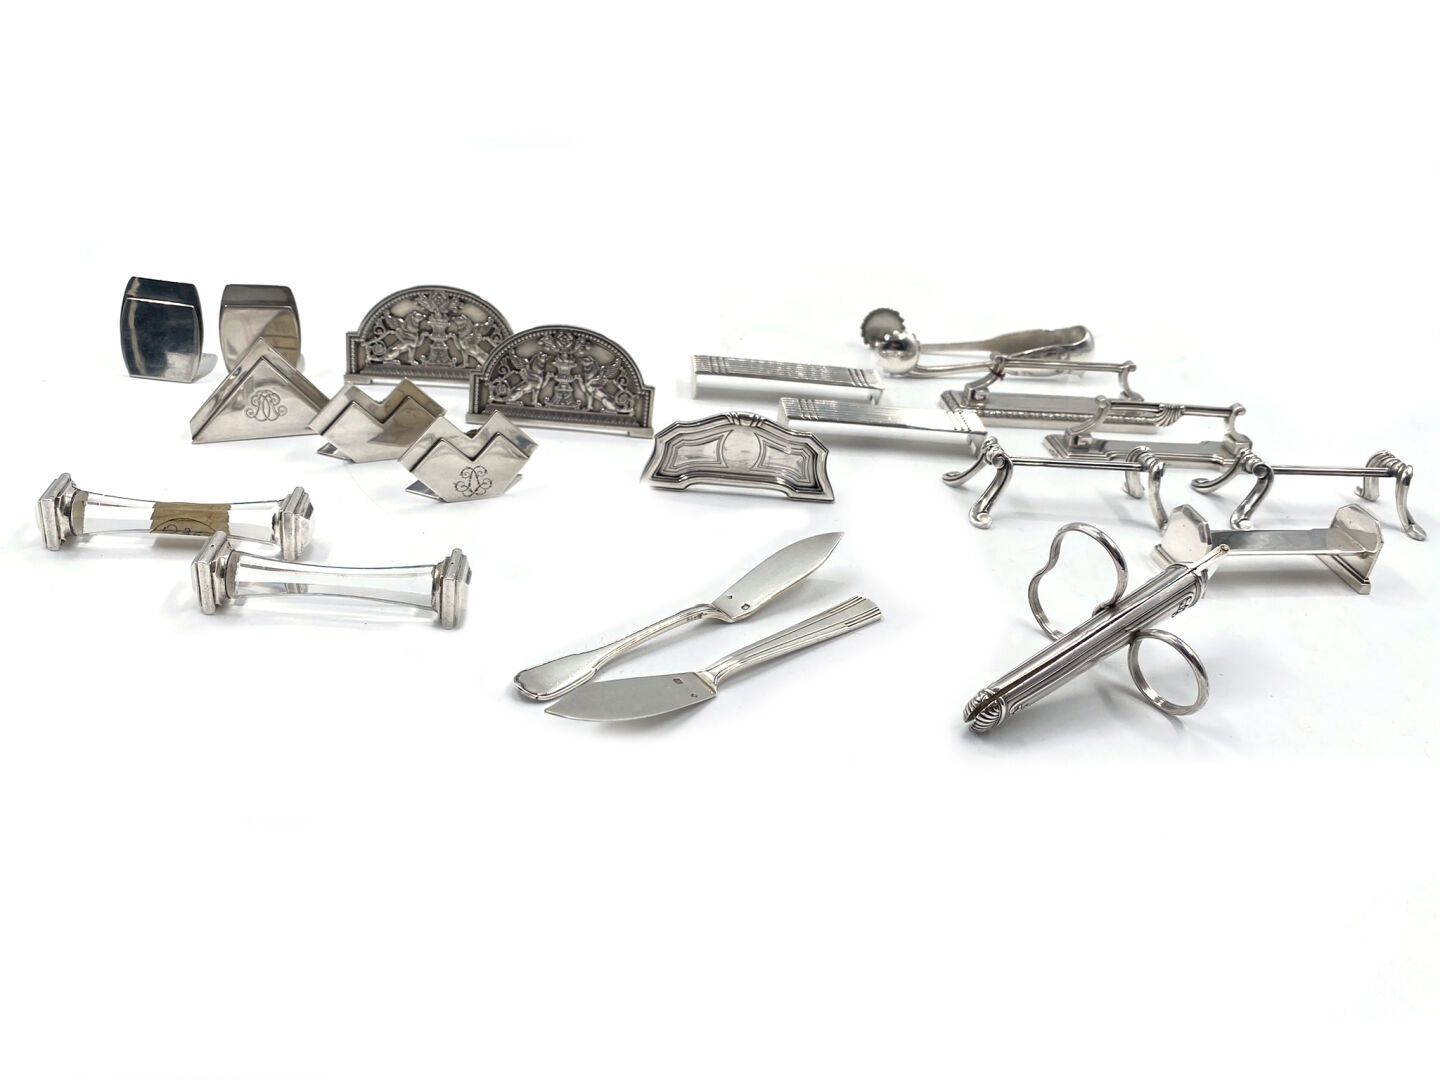 Null 博因-塔布瑞特
拍品为千分之八百和九百五十的银质，包括:
- 一套8个不同型号的刀架，其中两个是水晶和银制的。
- 八个不同型号的菜单架。
- 一个糖&hellip;